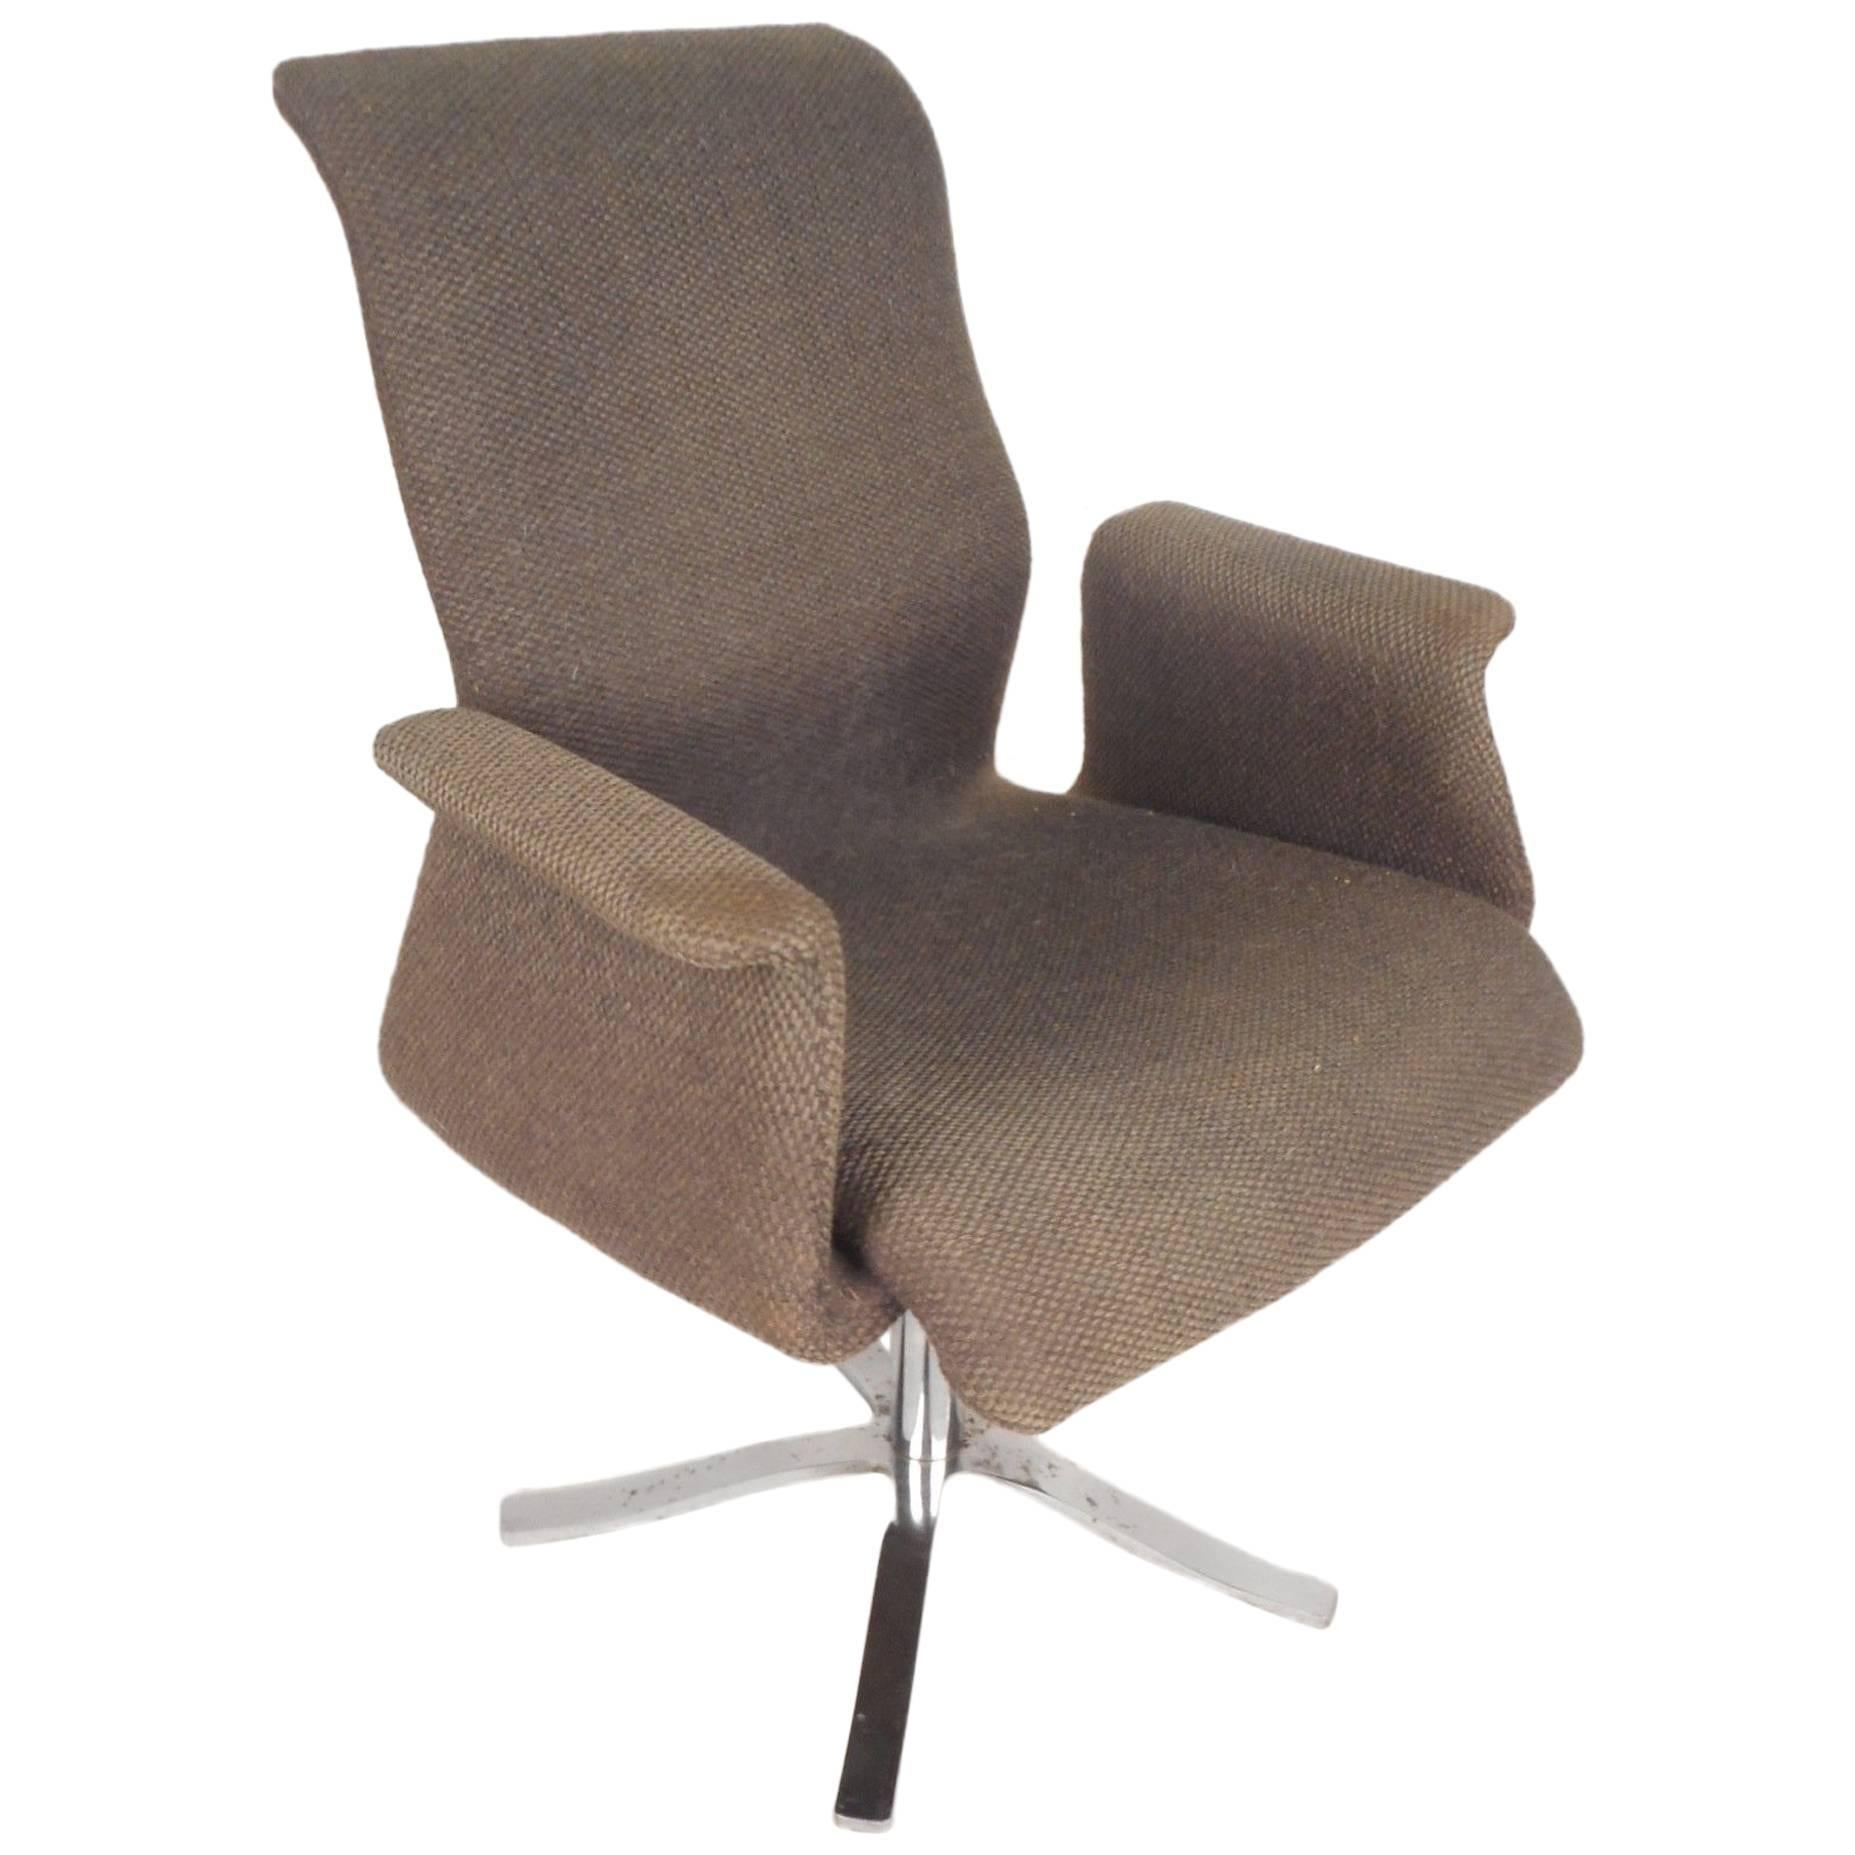 Unique Mid-Century Modern Swivel Lounge Chair